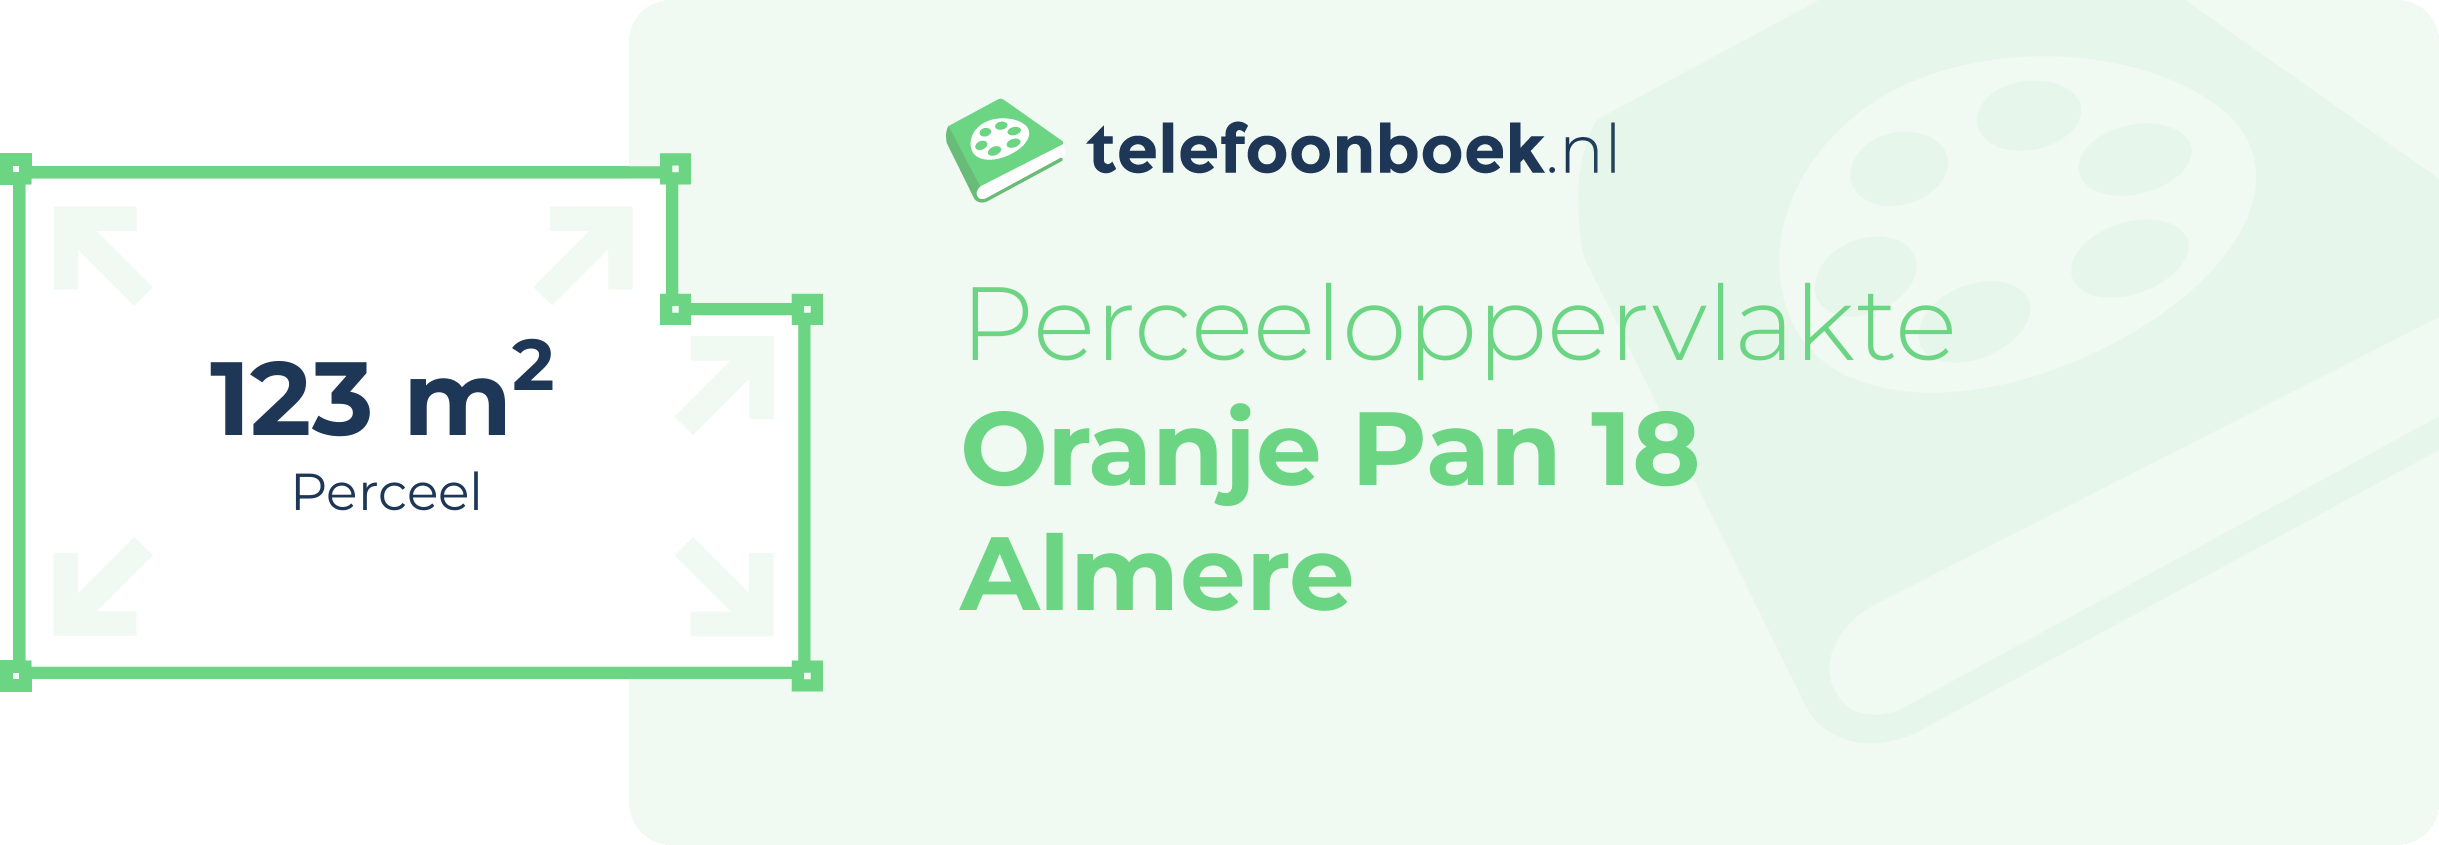 Perceeloppervlakte Oranje Pan 18 Almere